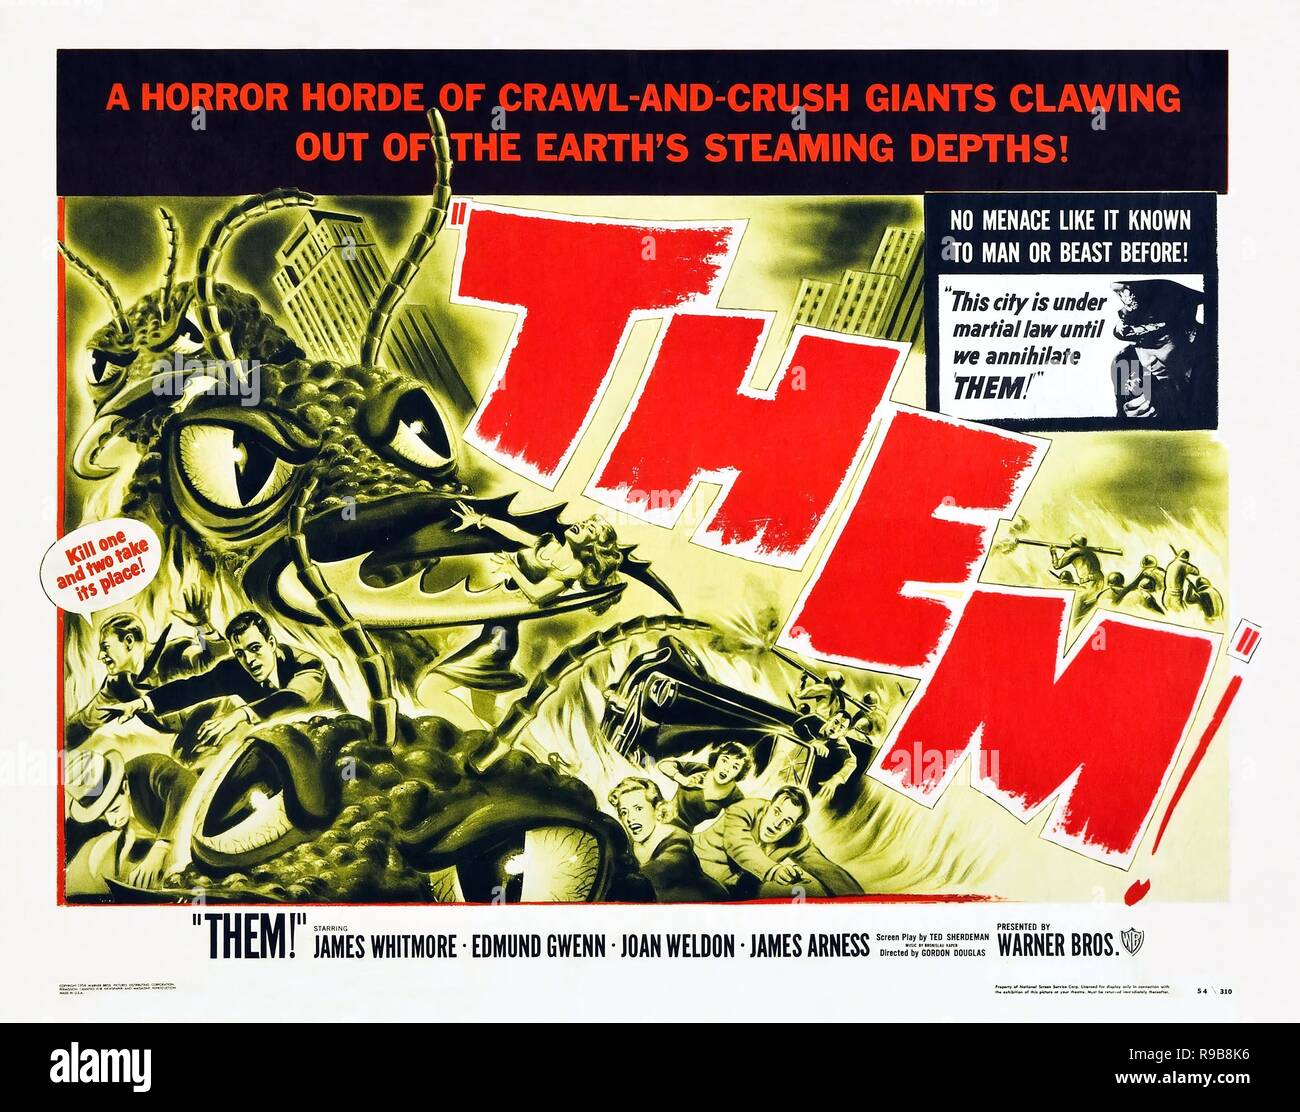 Original film title: THEM!. English title: THEM!. Year: 1954. Director: GORDON DOUGLAS. Credit: WARNER BROTHERS / Album Stock Photo